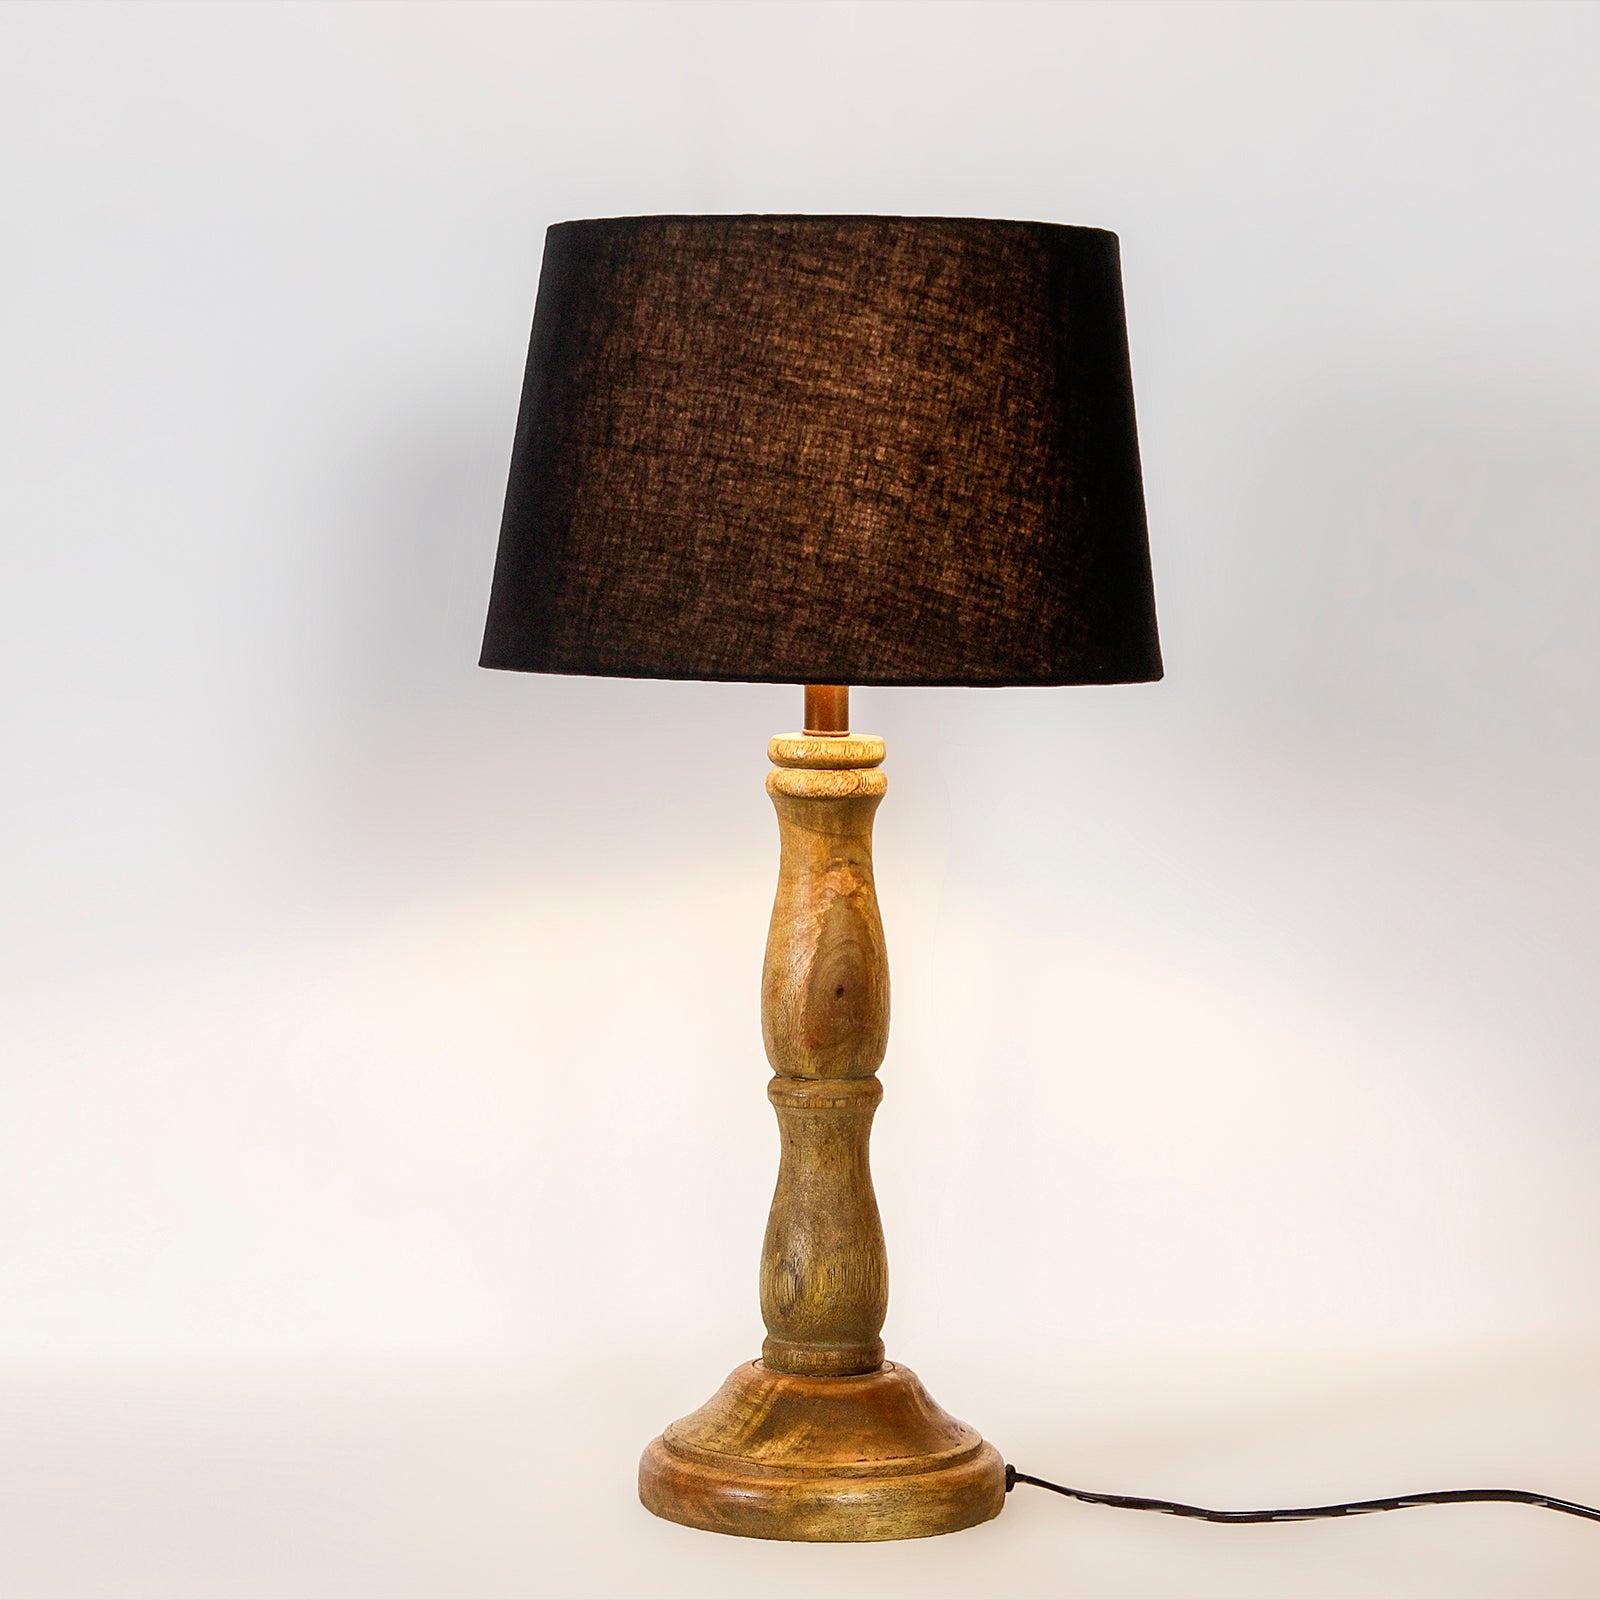 Charlotte Wood Table Lamp